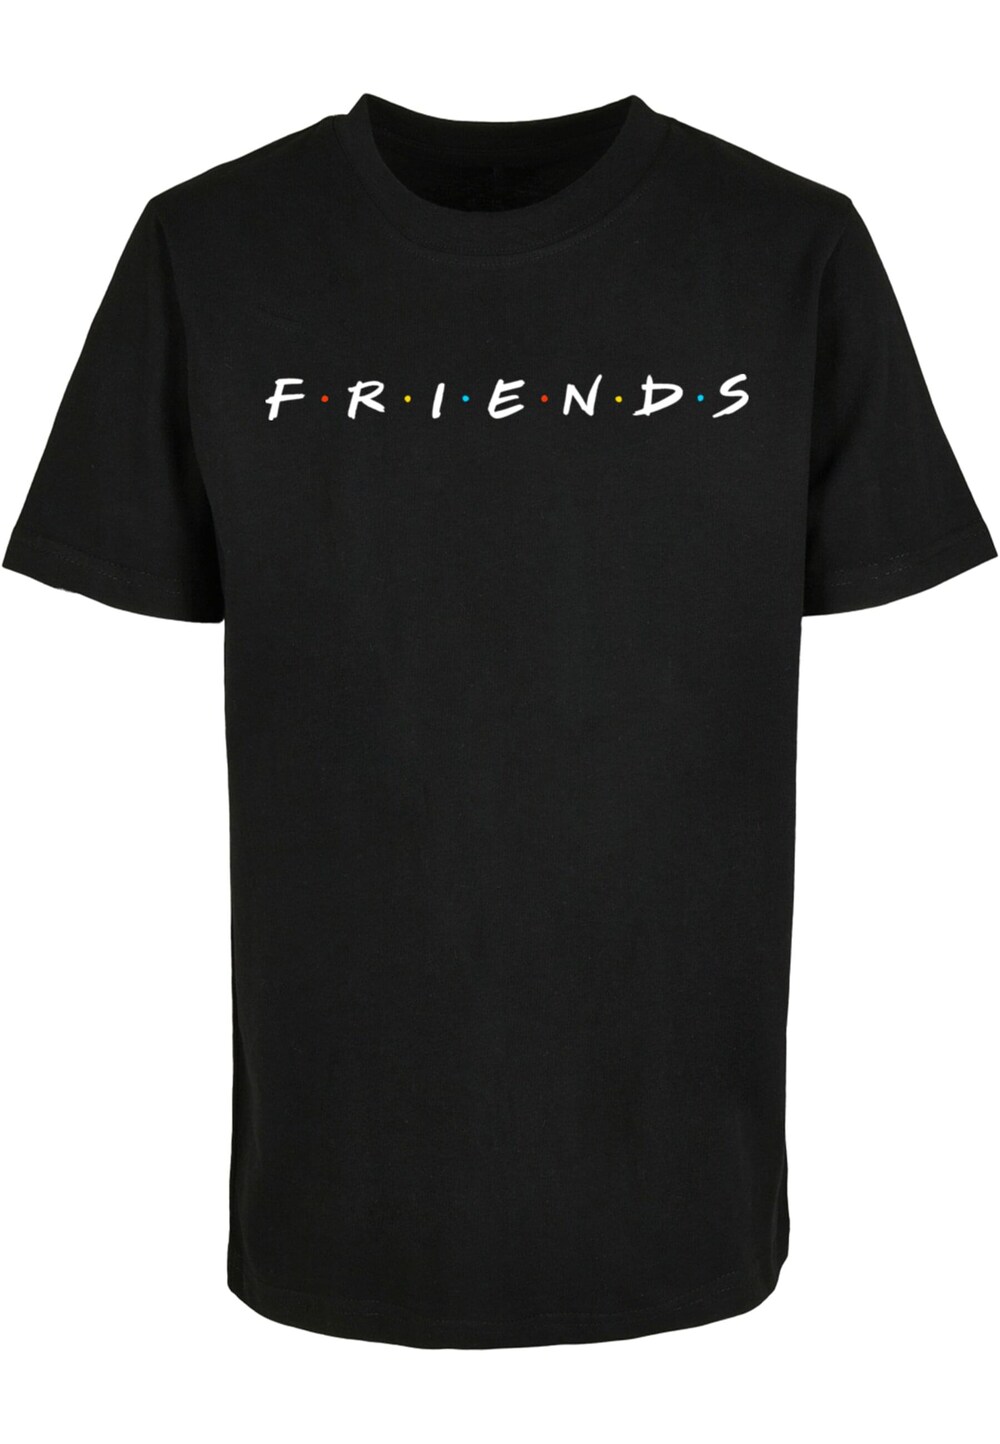 Рубашка ABSOLUTE CULT Friends, черный